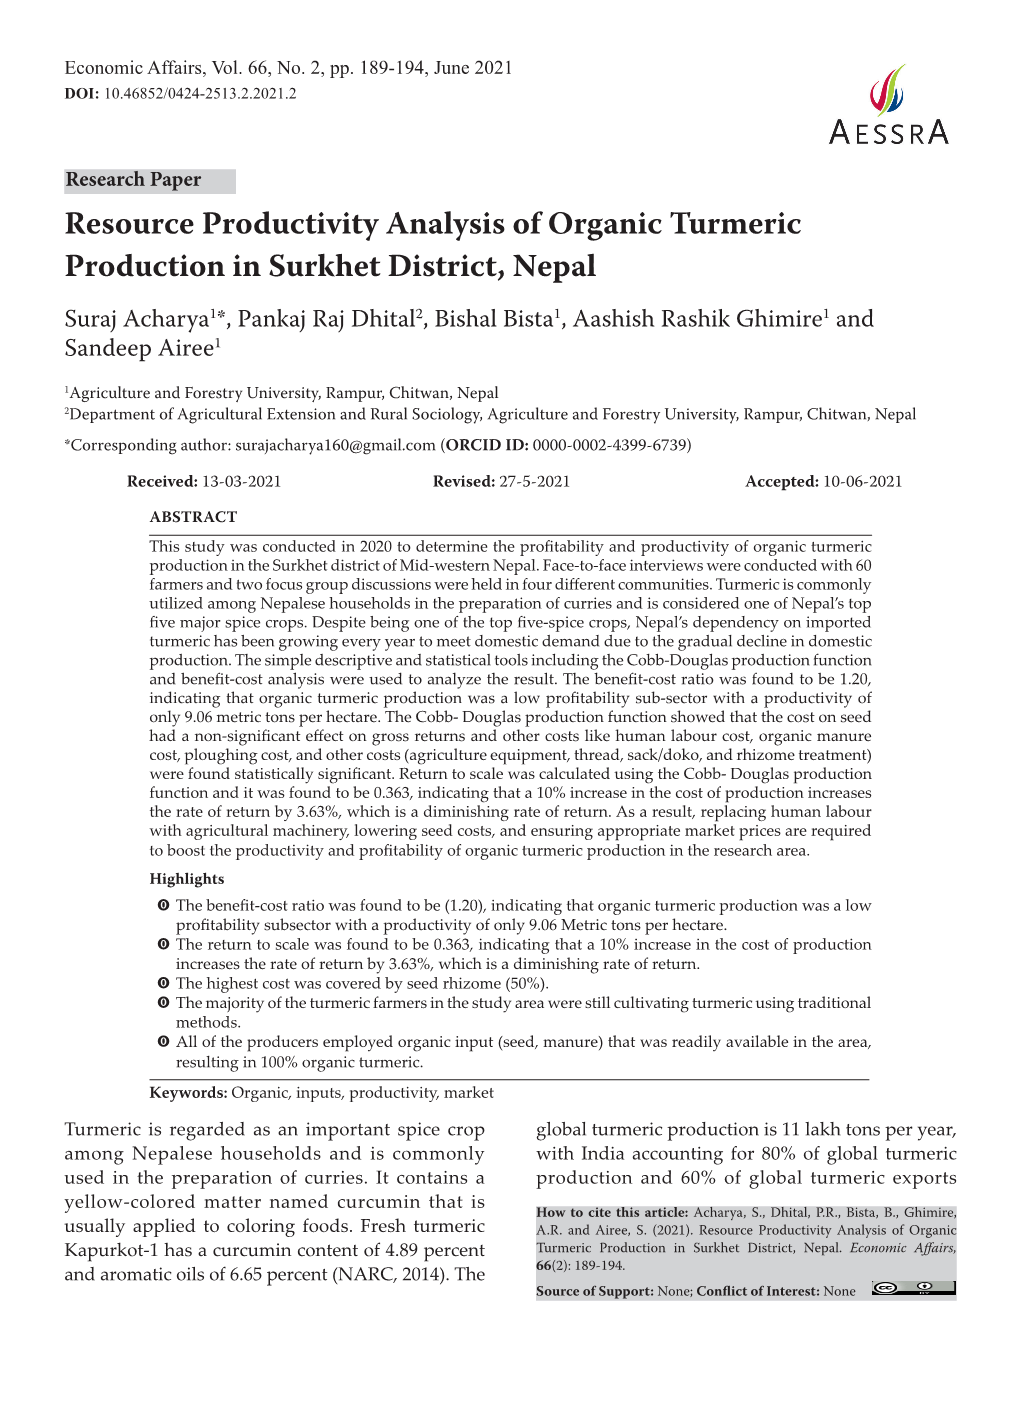 Resource Productivity Analysis of Organic Turmeric